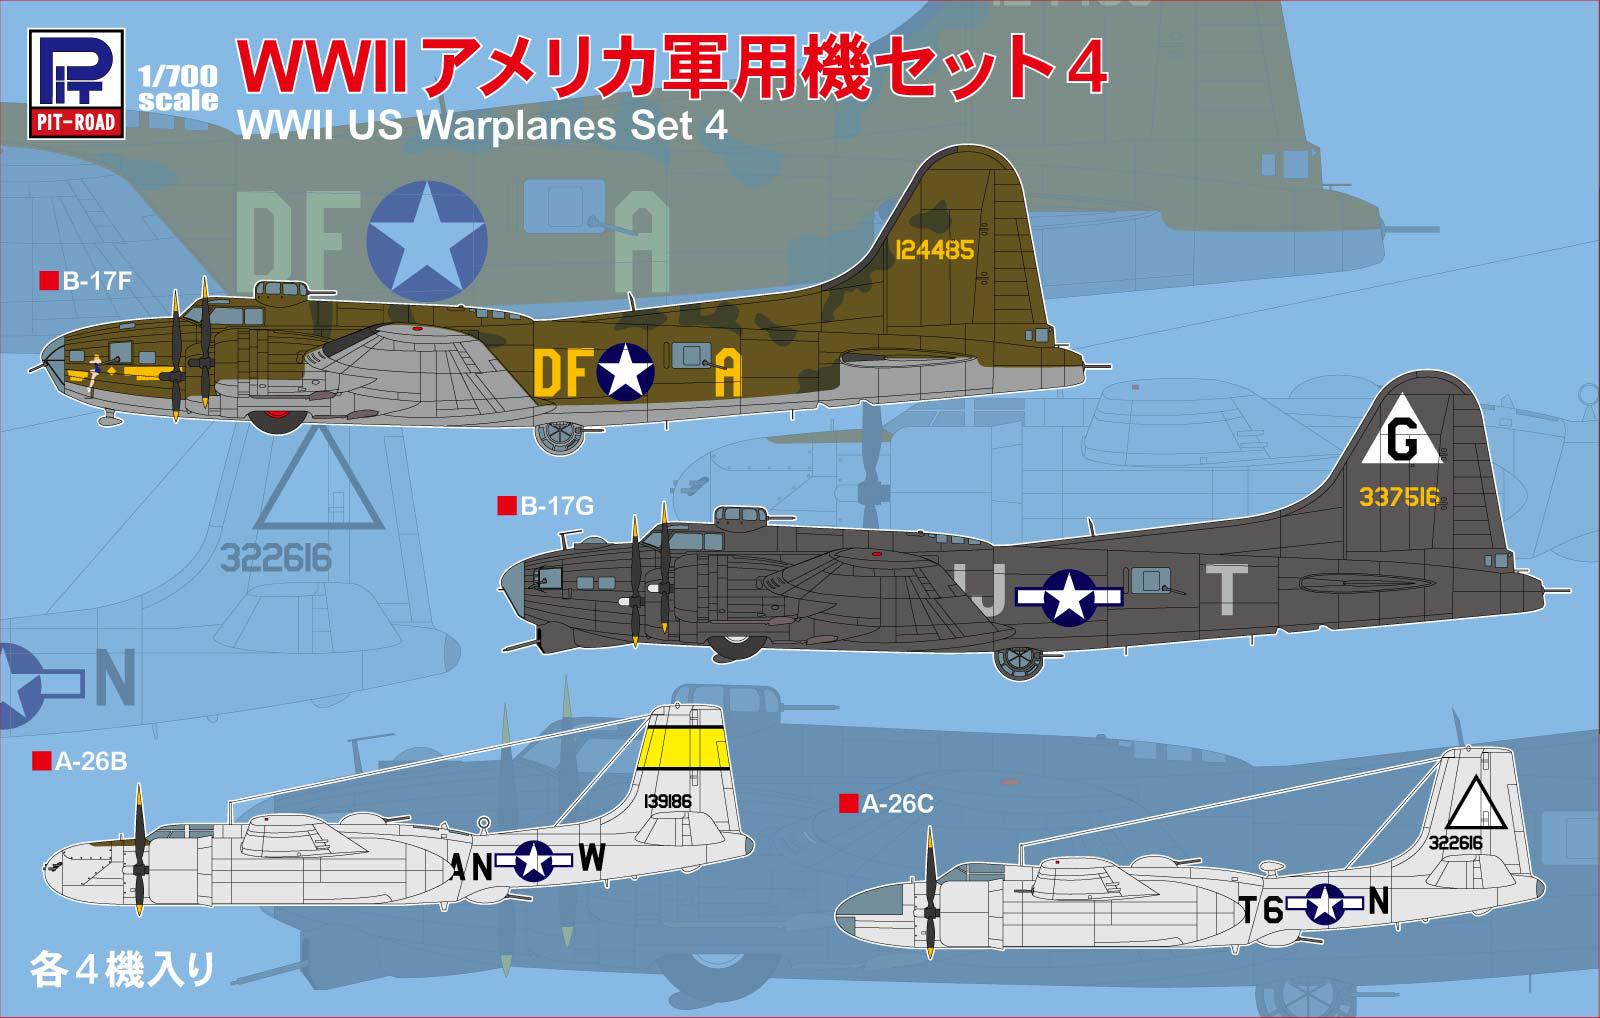 Pit-road 1/700 Skywave Series WWII US Warplane 2 Plastic Model S43 for sale online 